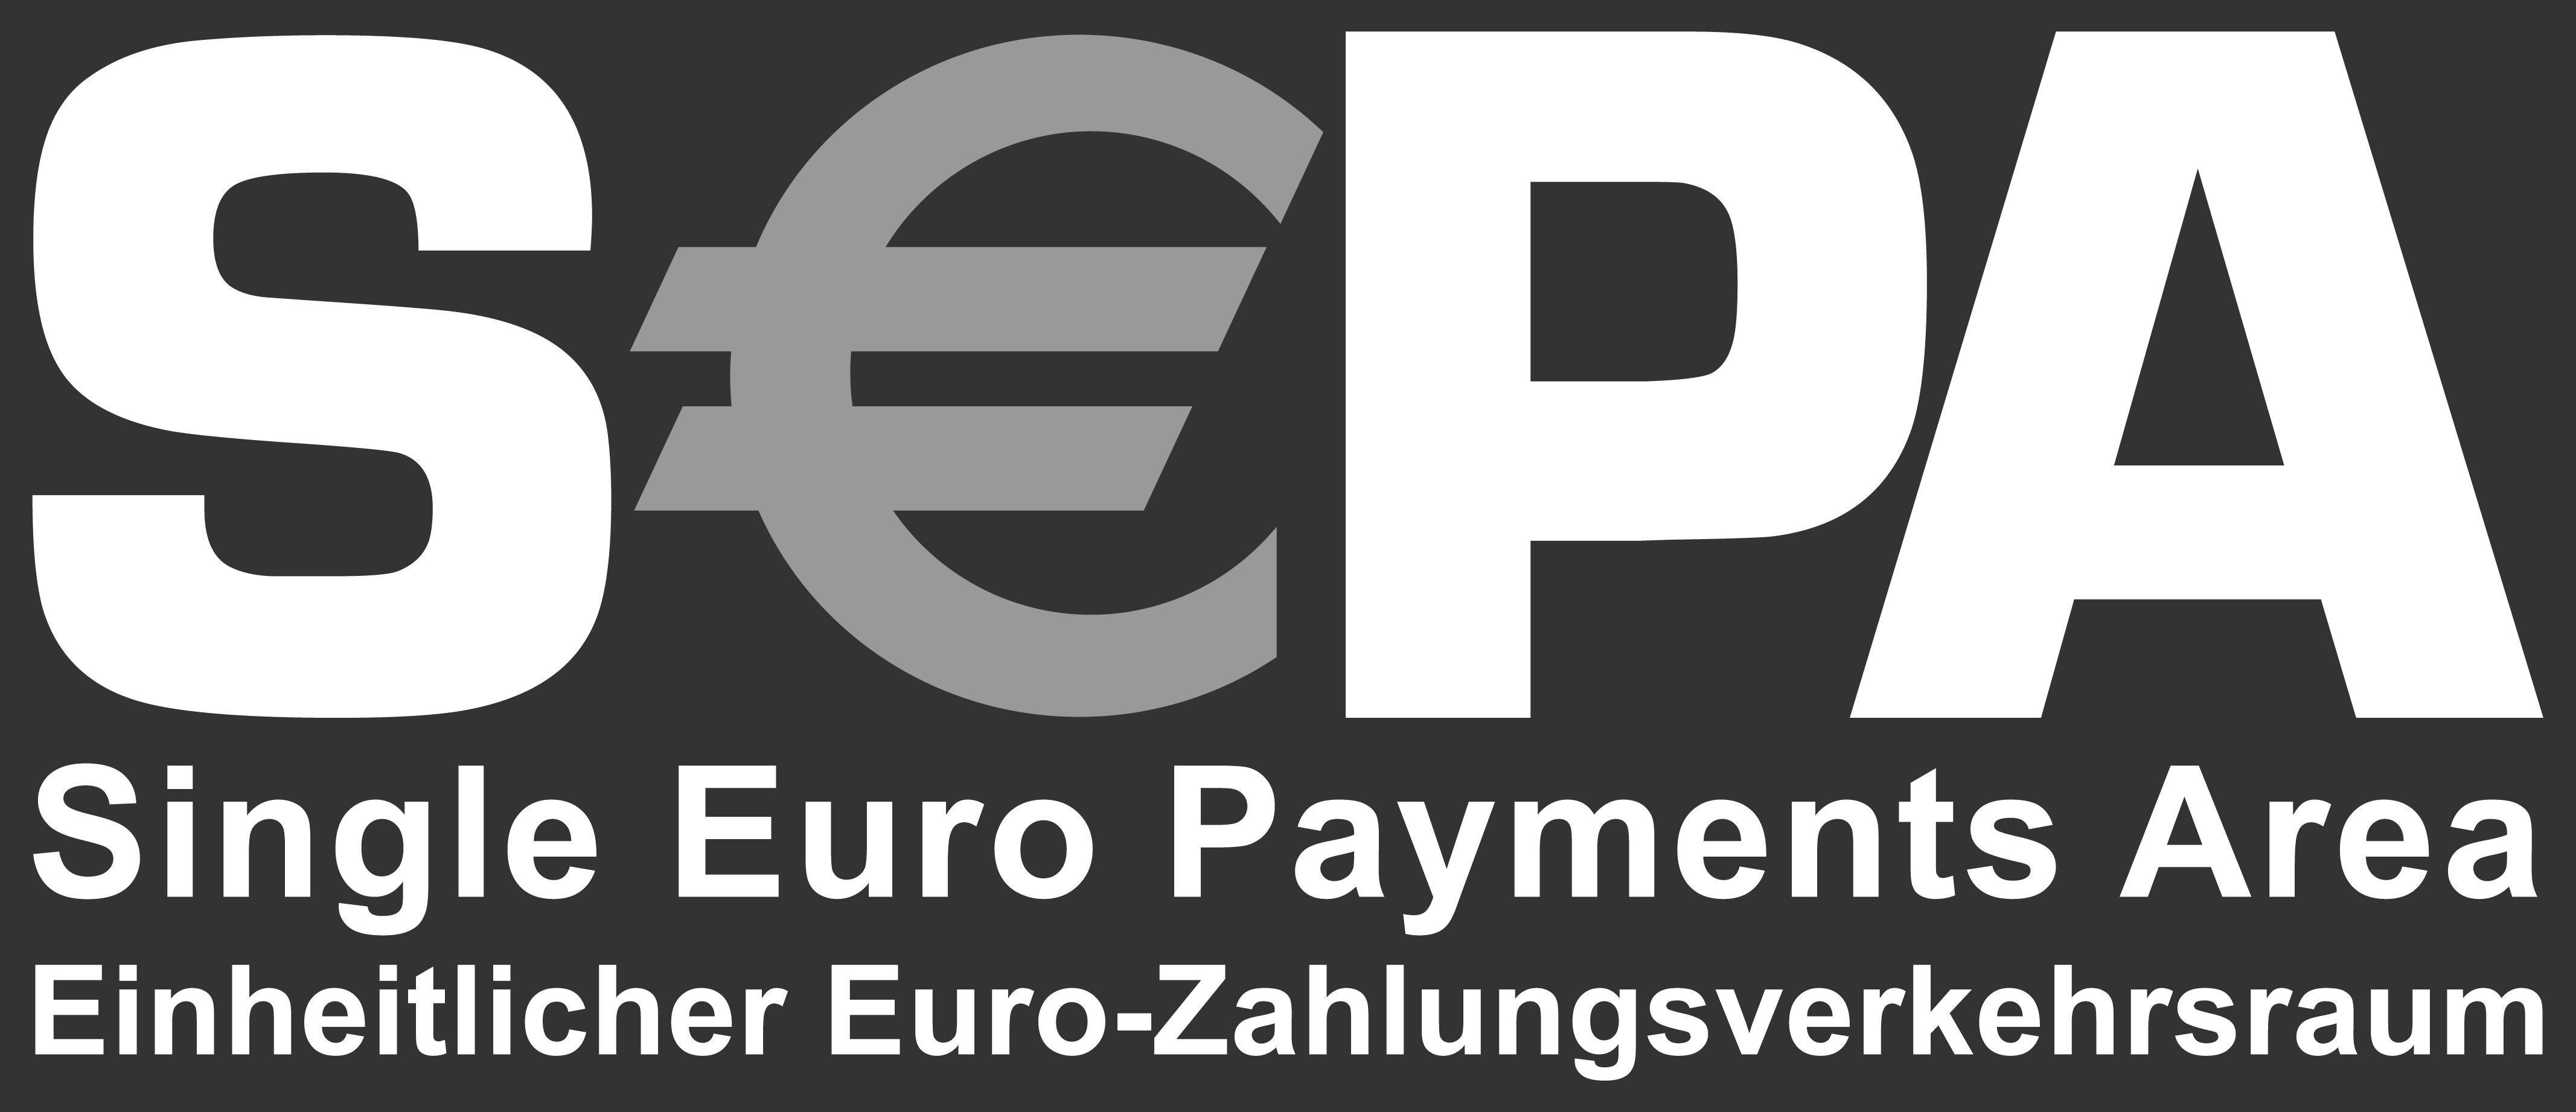 Single_Euro_Payments_Area_logo